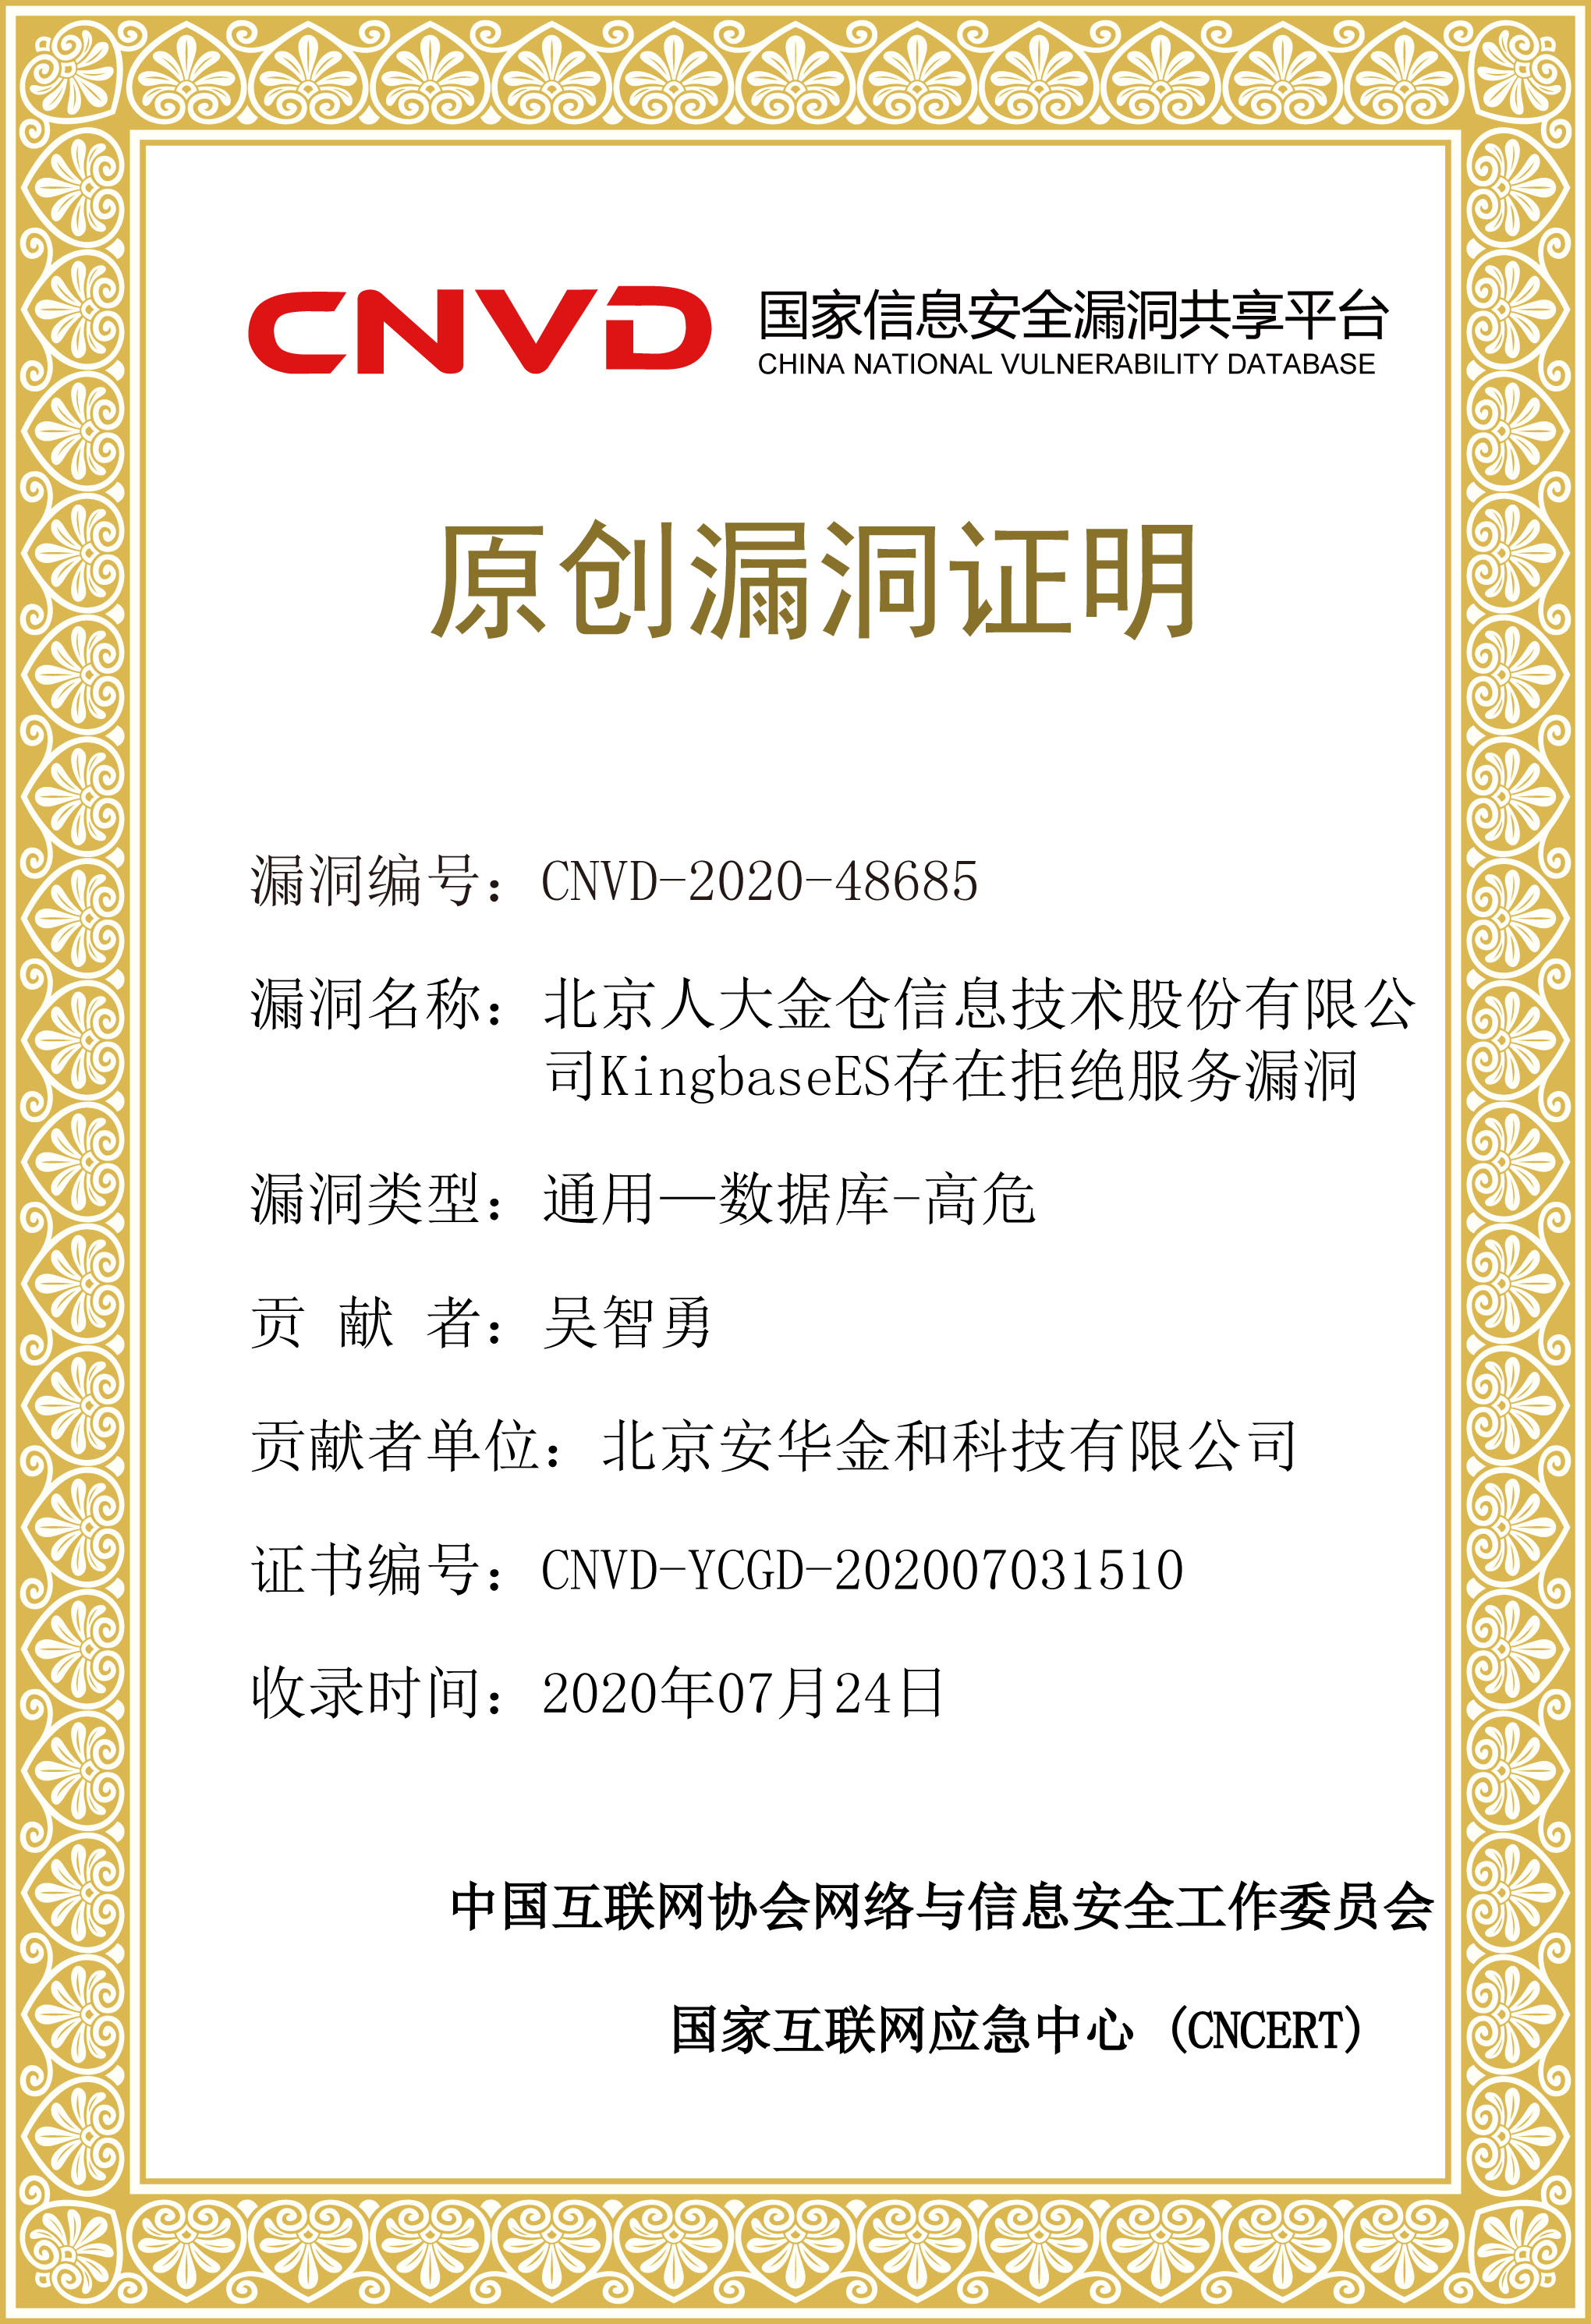 CNVD-YCGD-202007031510